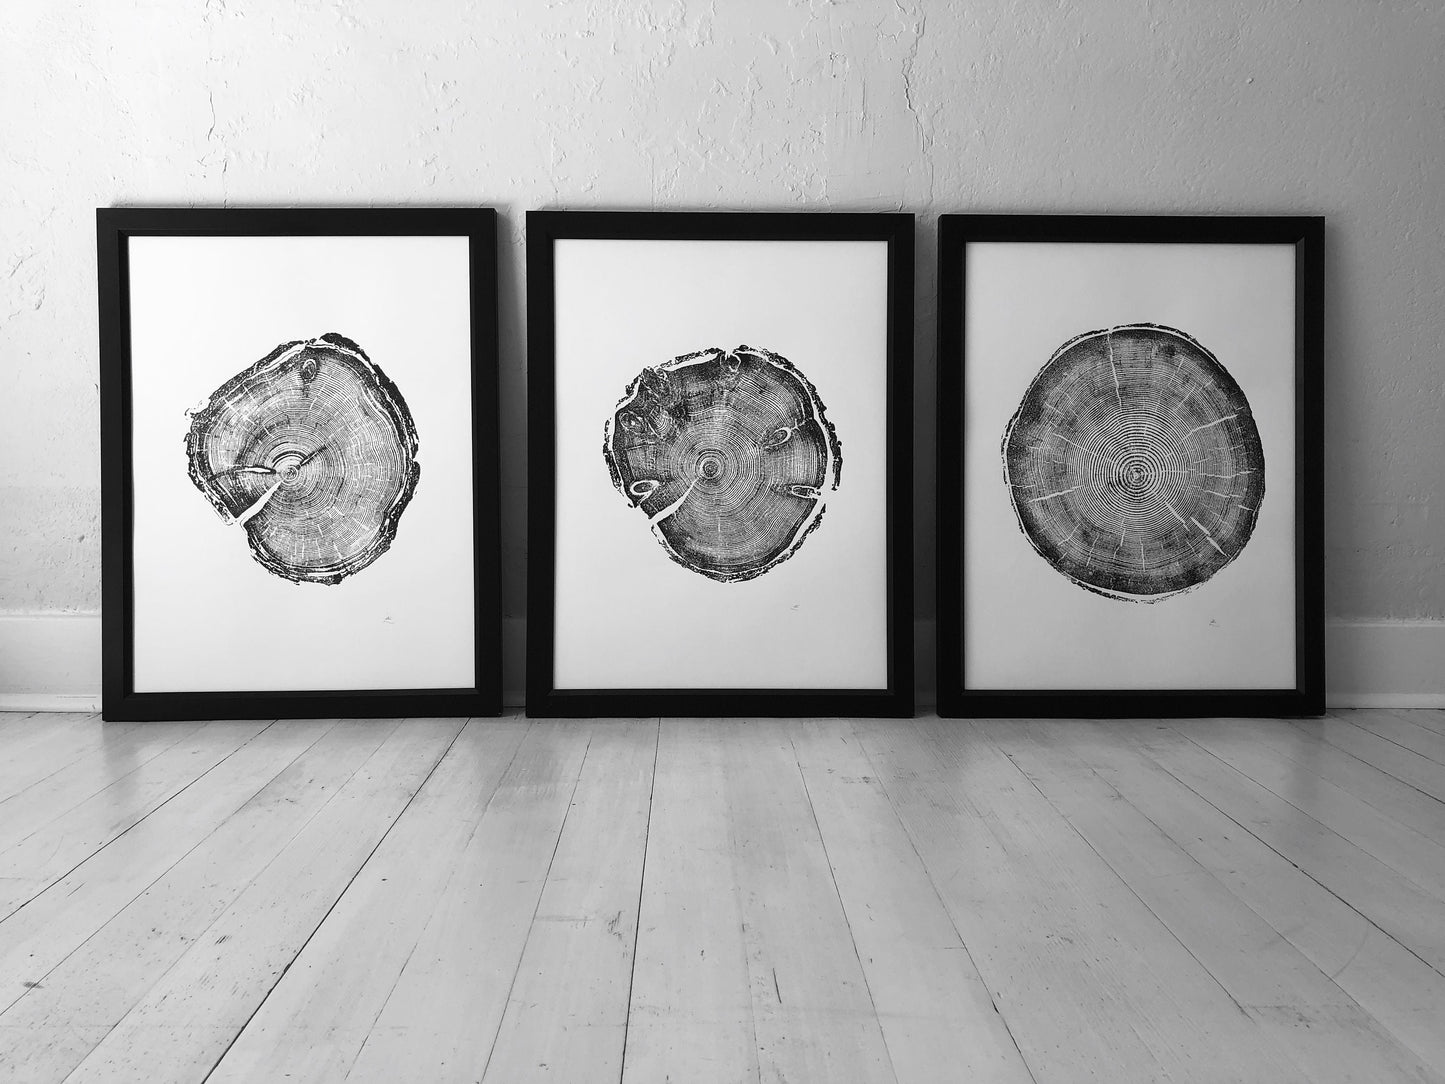 Utah Pines Triptych - 18x24 each print